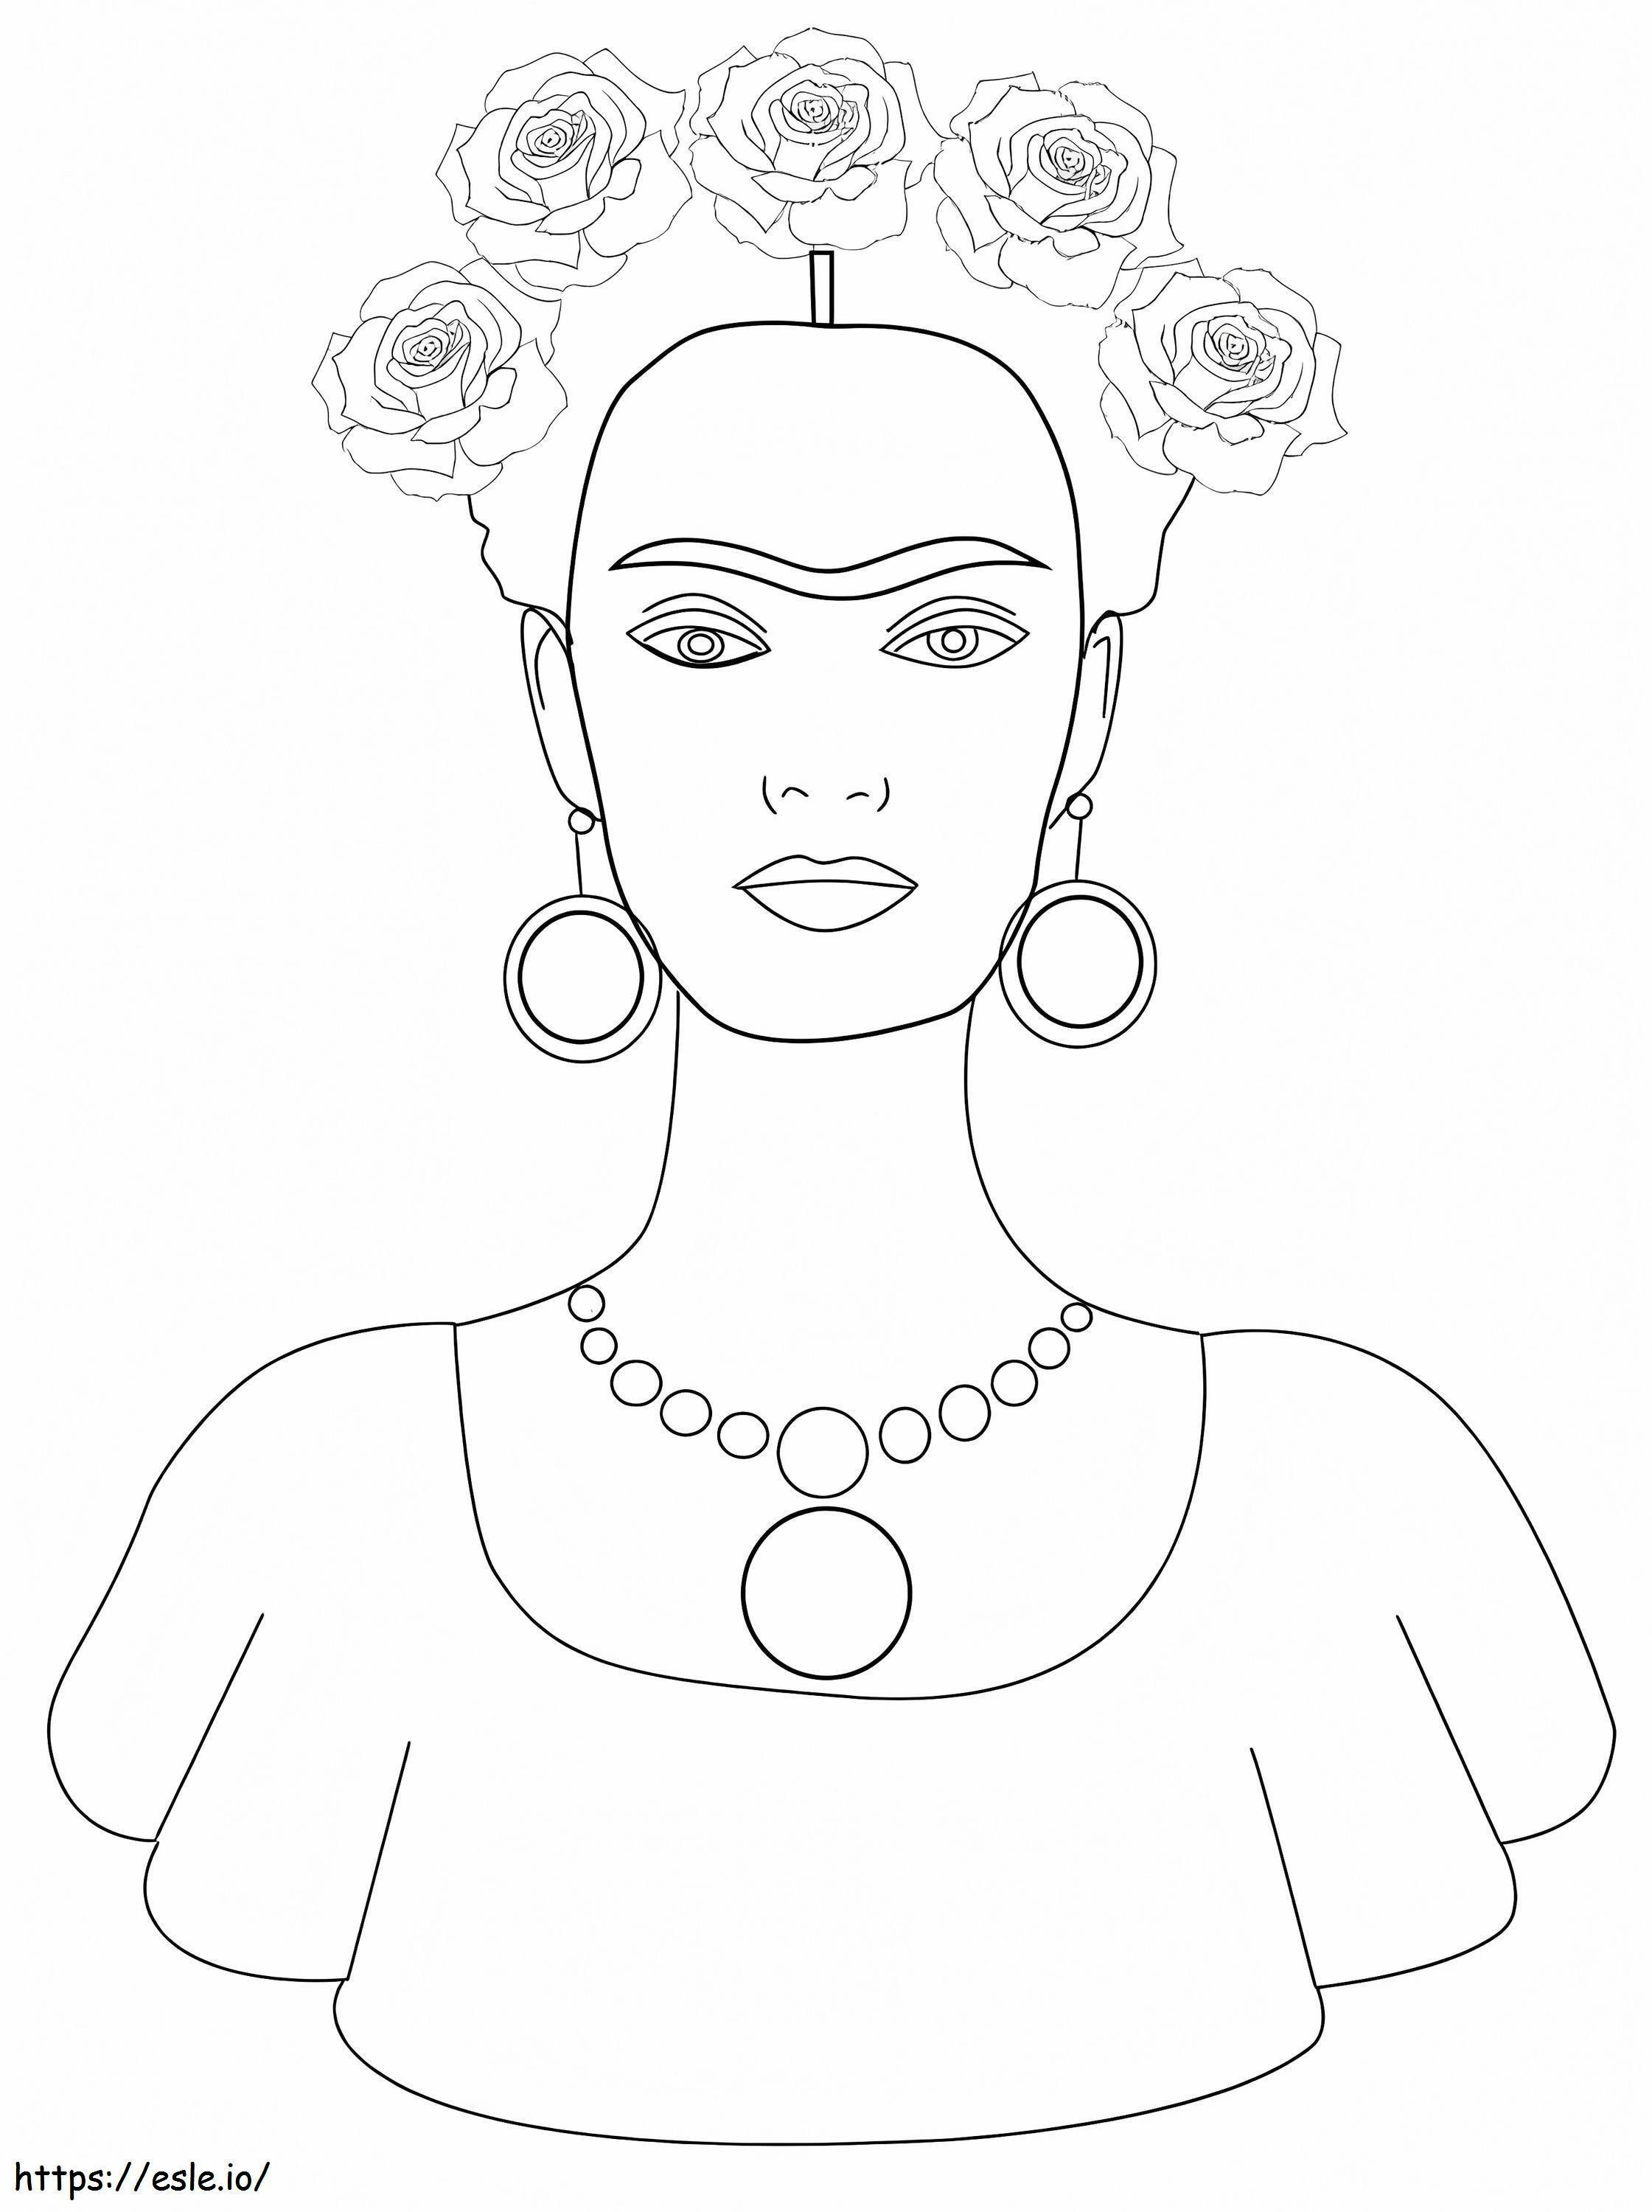 Frida Kahlo 6 ausmalbilder